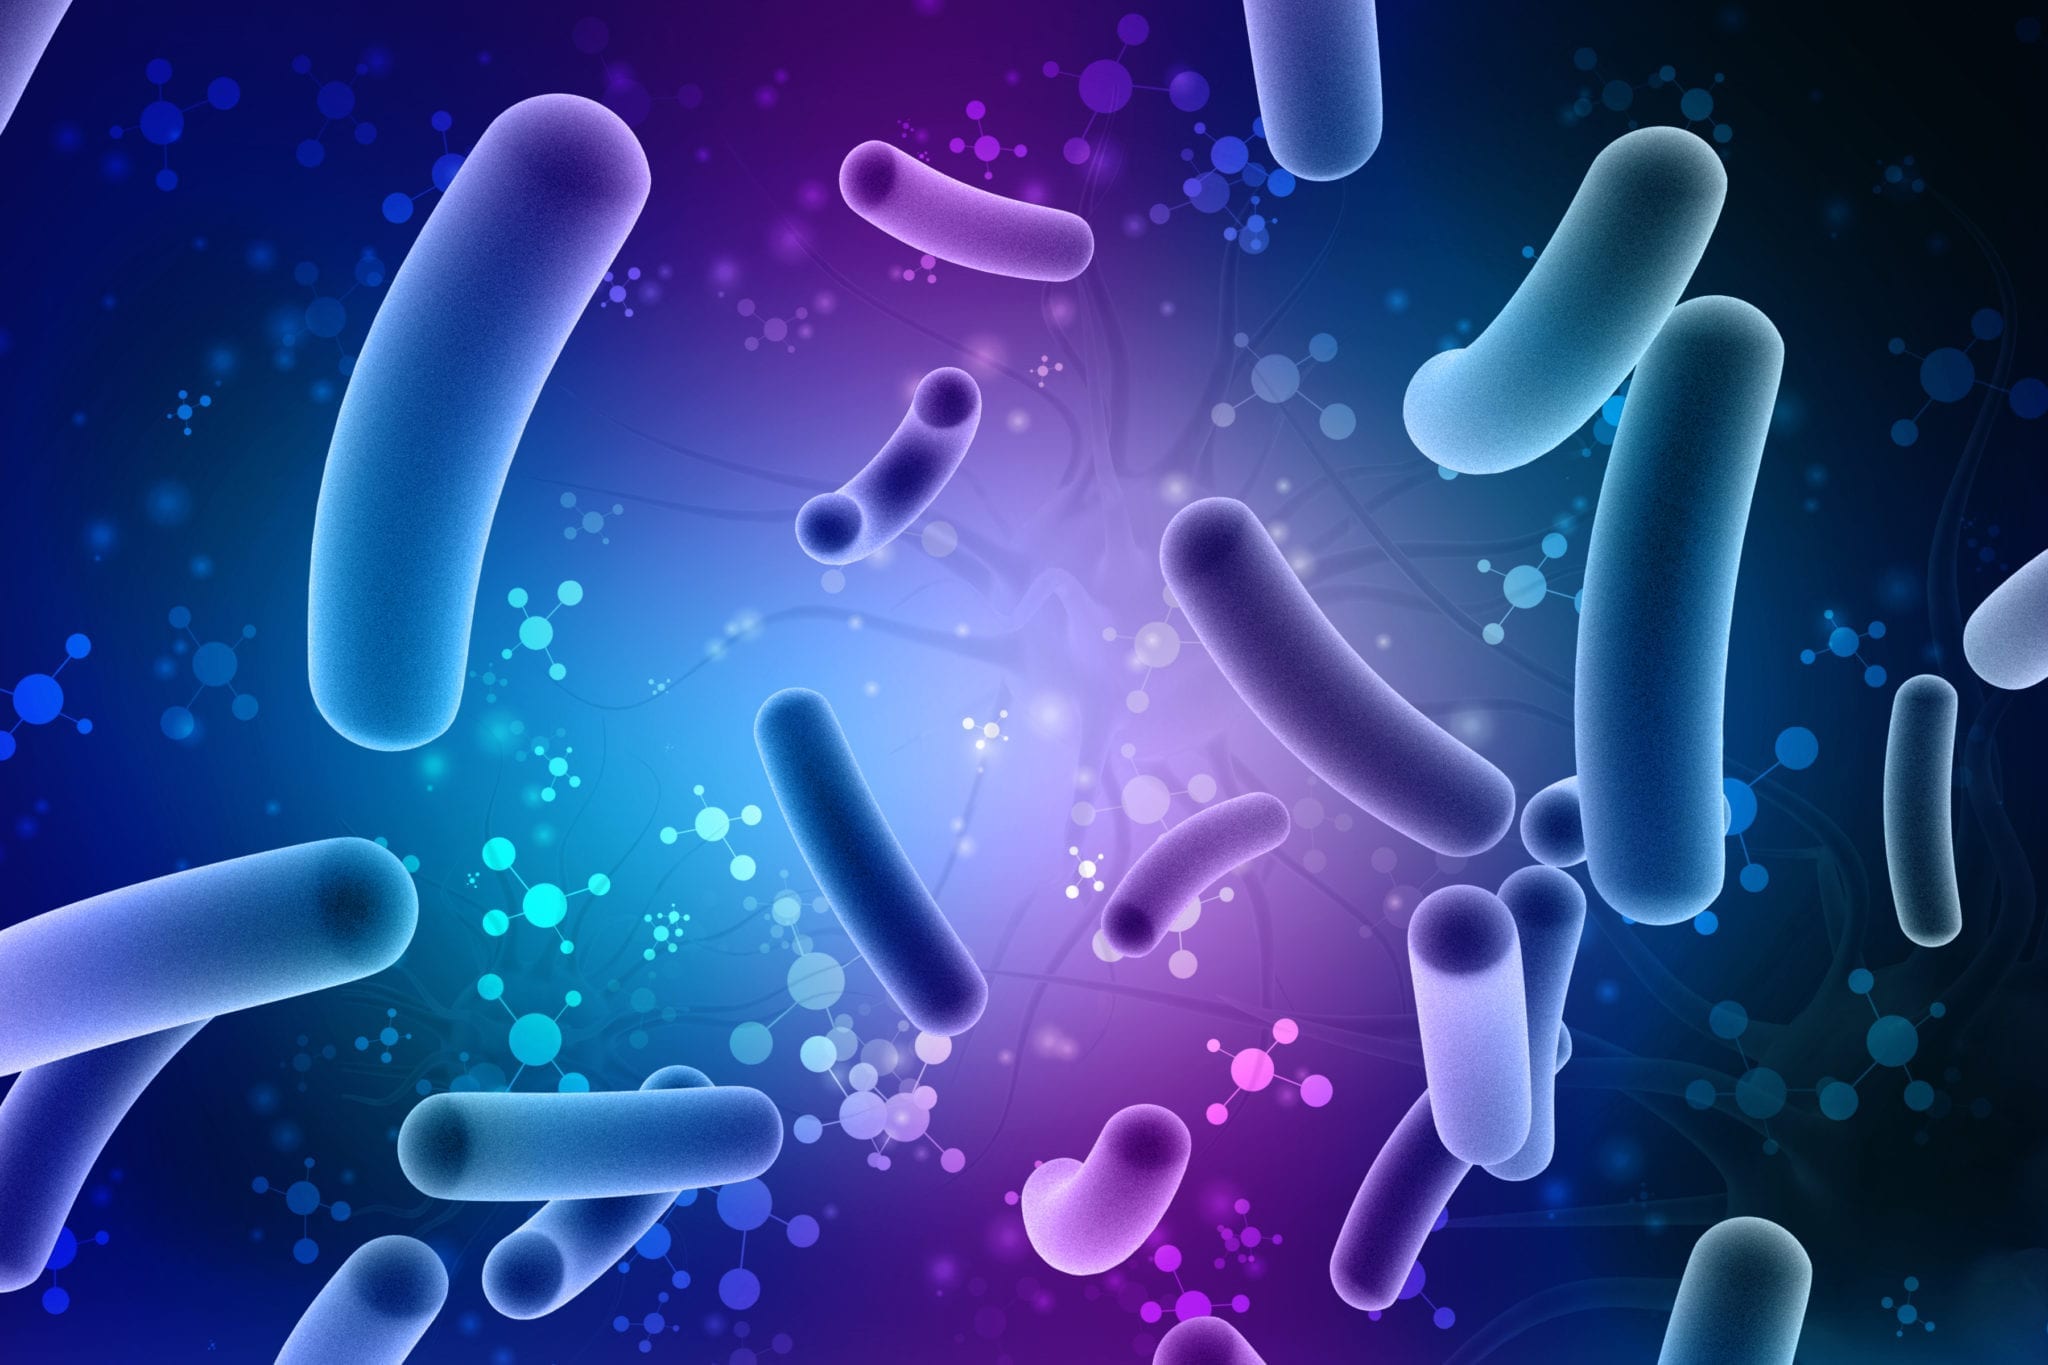 Bugs 101: Probiotics, Prebiotics, and the Microbiome